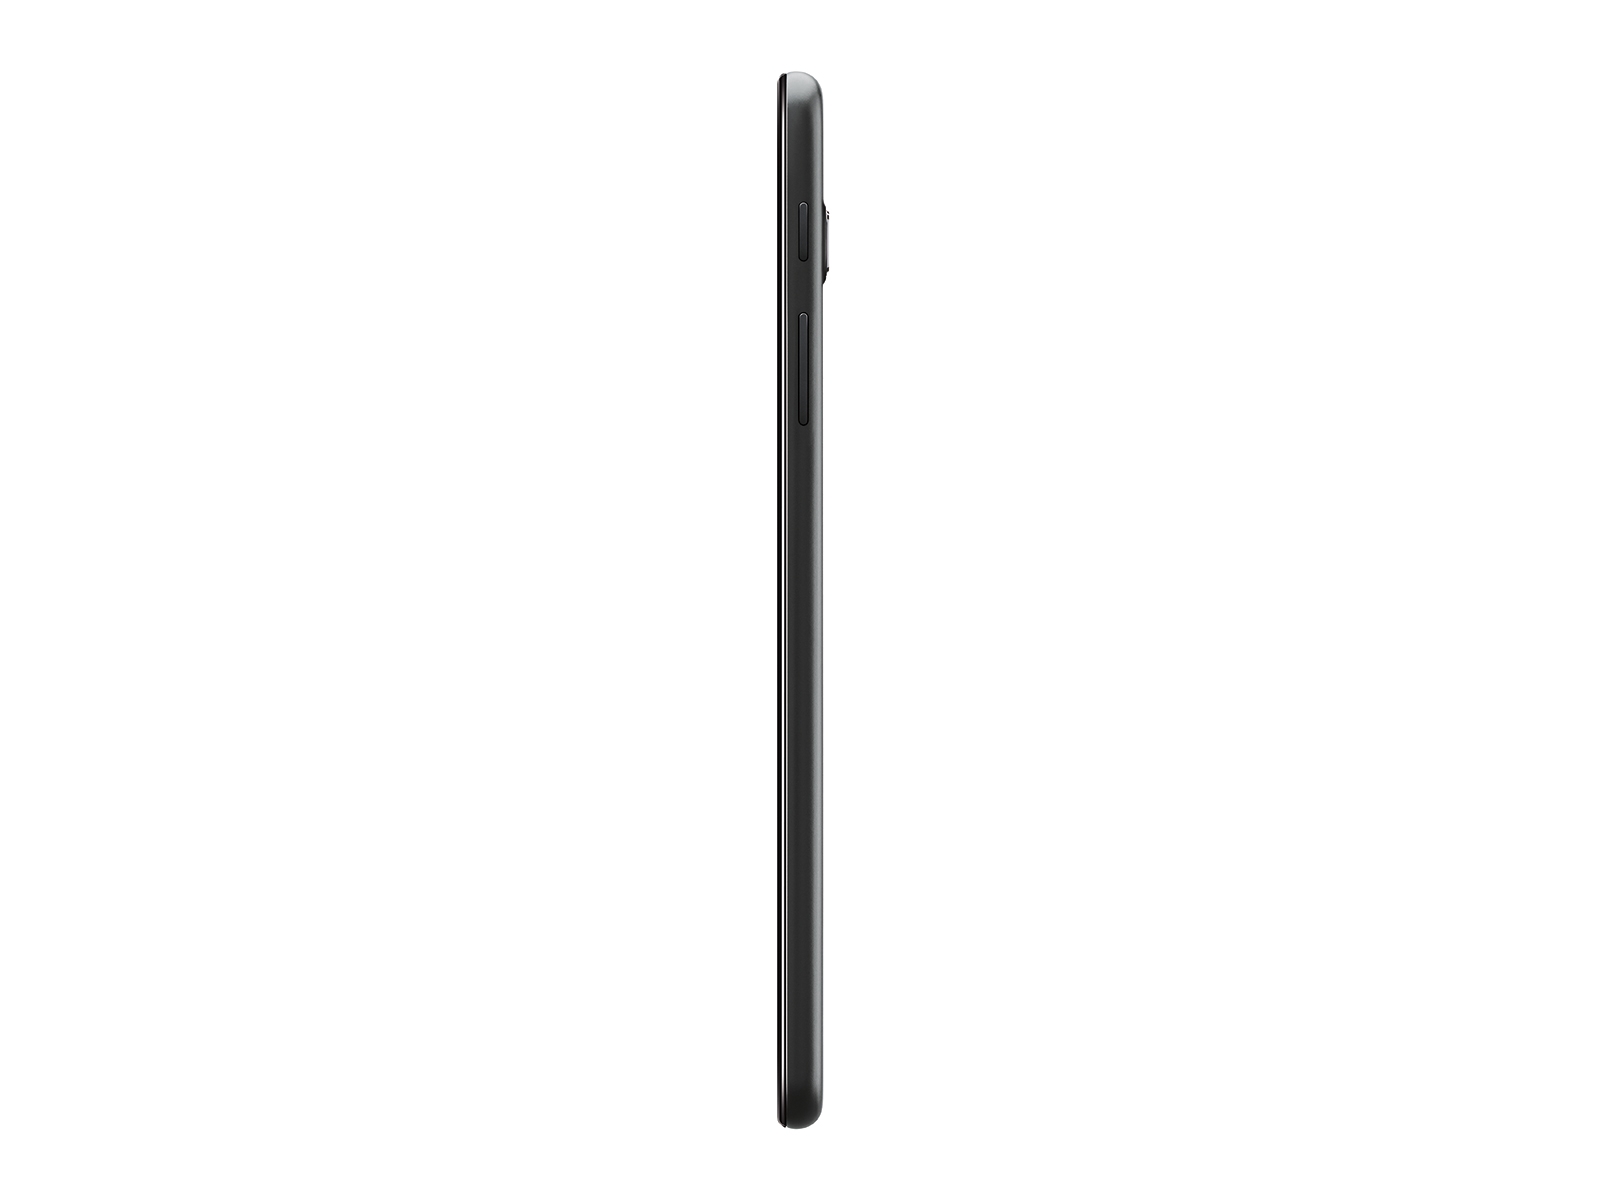 Samsung Galaxy Tab A SM-T387 8 Tablet - 32 GB Storage - WiFi and Verizon  4G - Black - (Renewed)